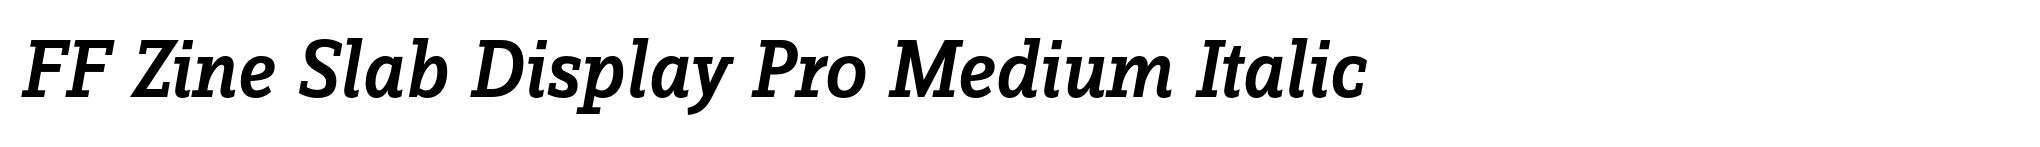 FF Zine Slab Display Pro Medium Italic image